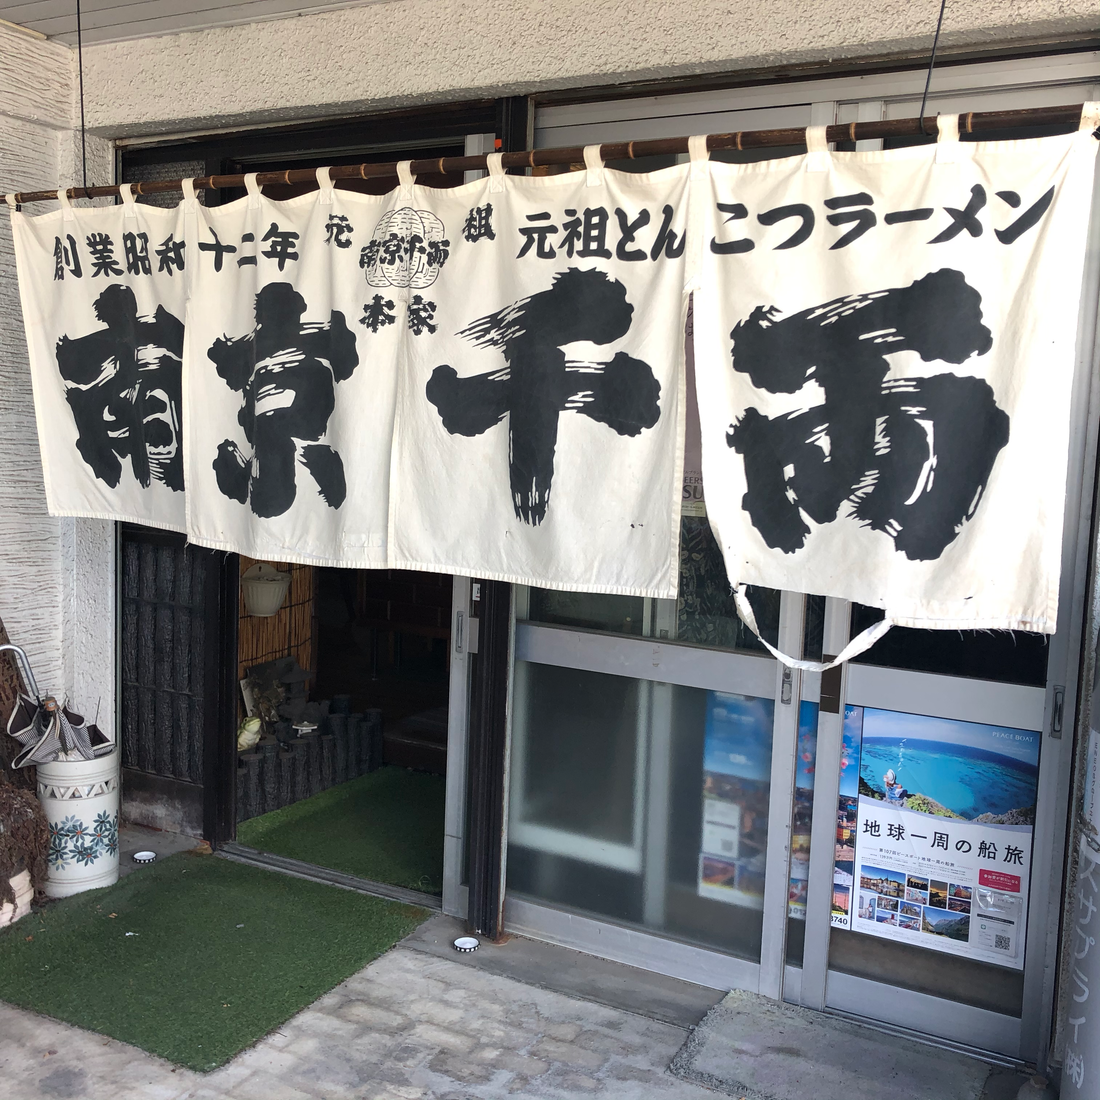 The History of Tonkotsu Ramen in Kyushu